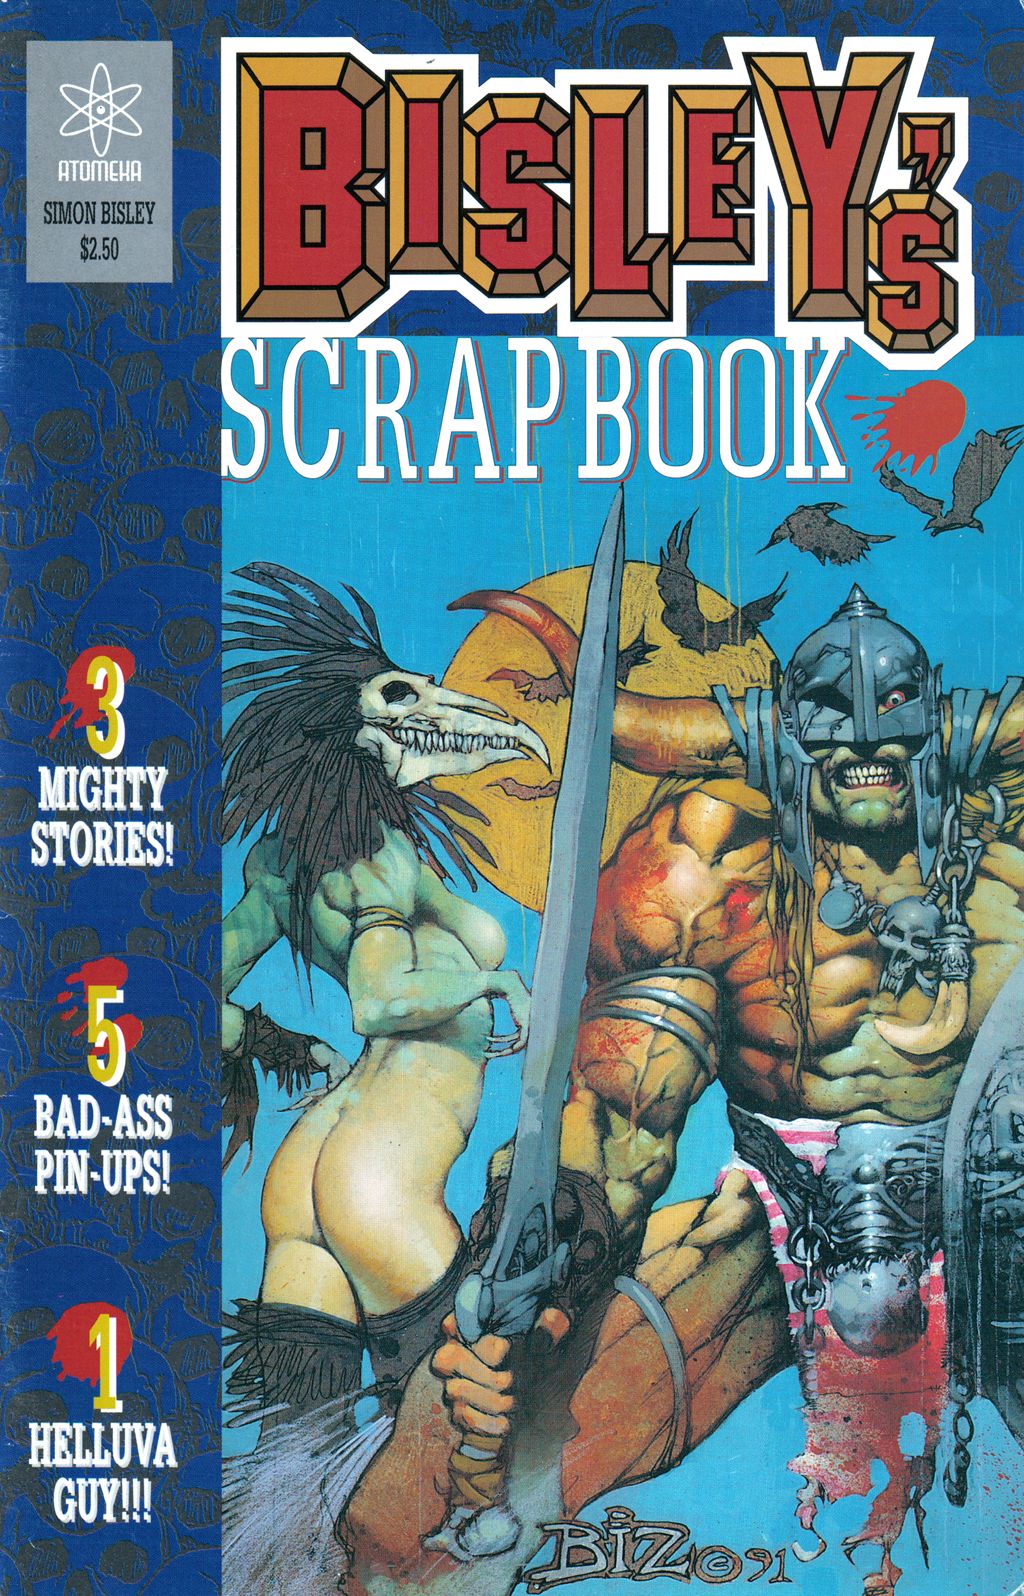 Read online Bisley's Scrapbook comic -  Issue # Full - 1